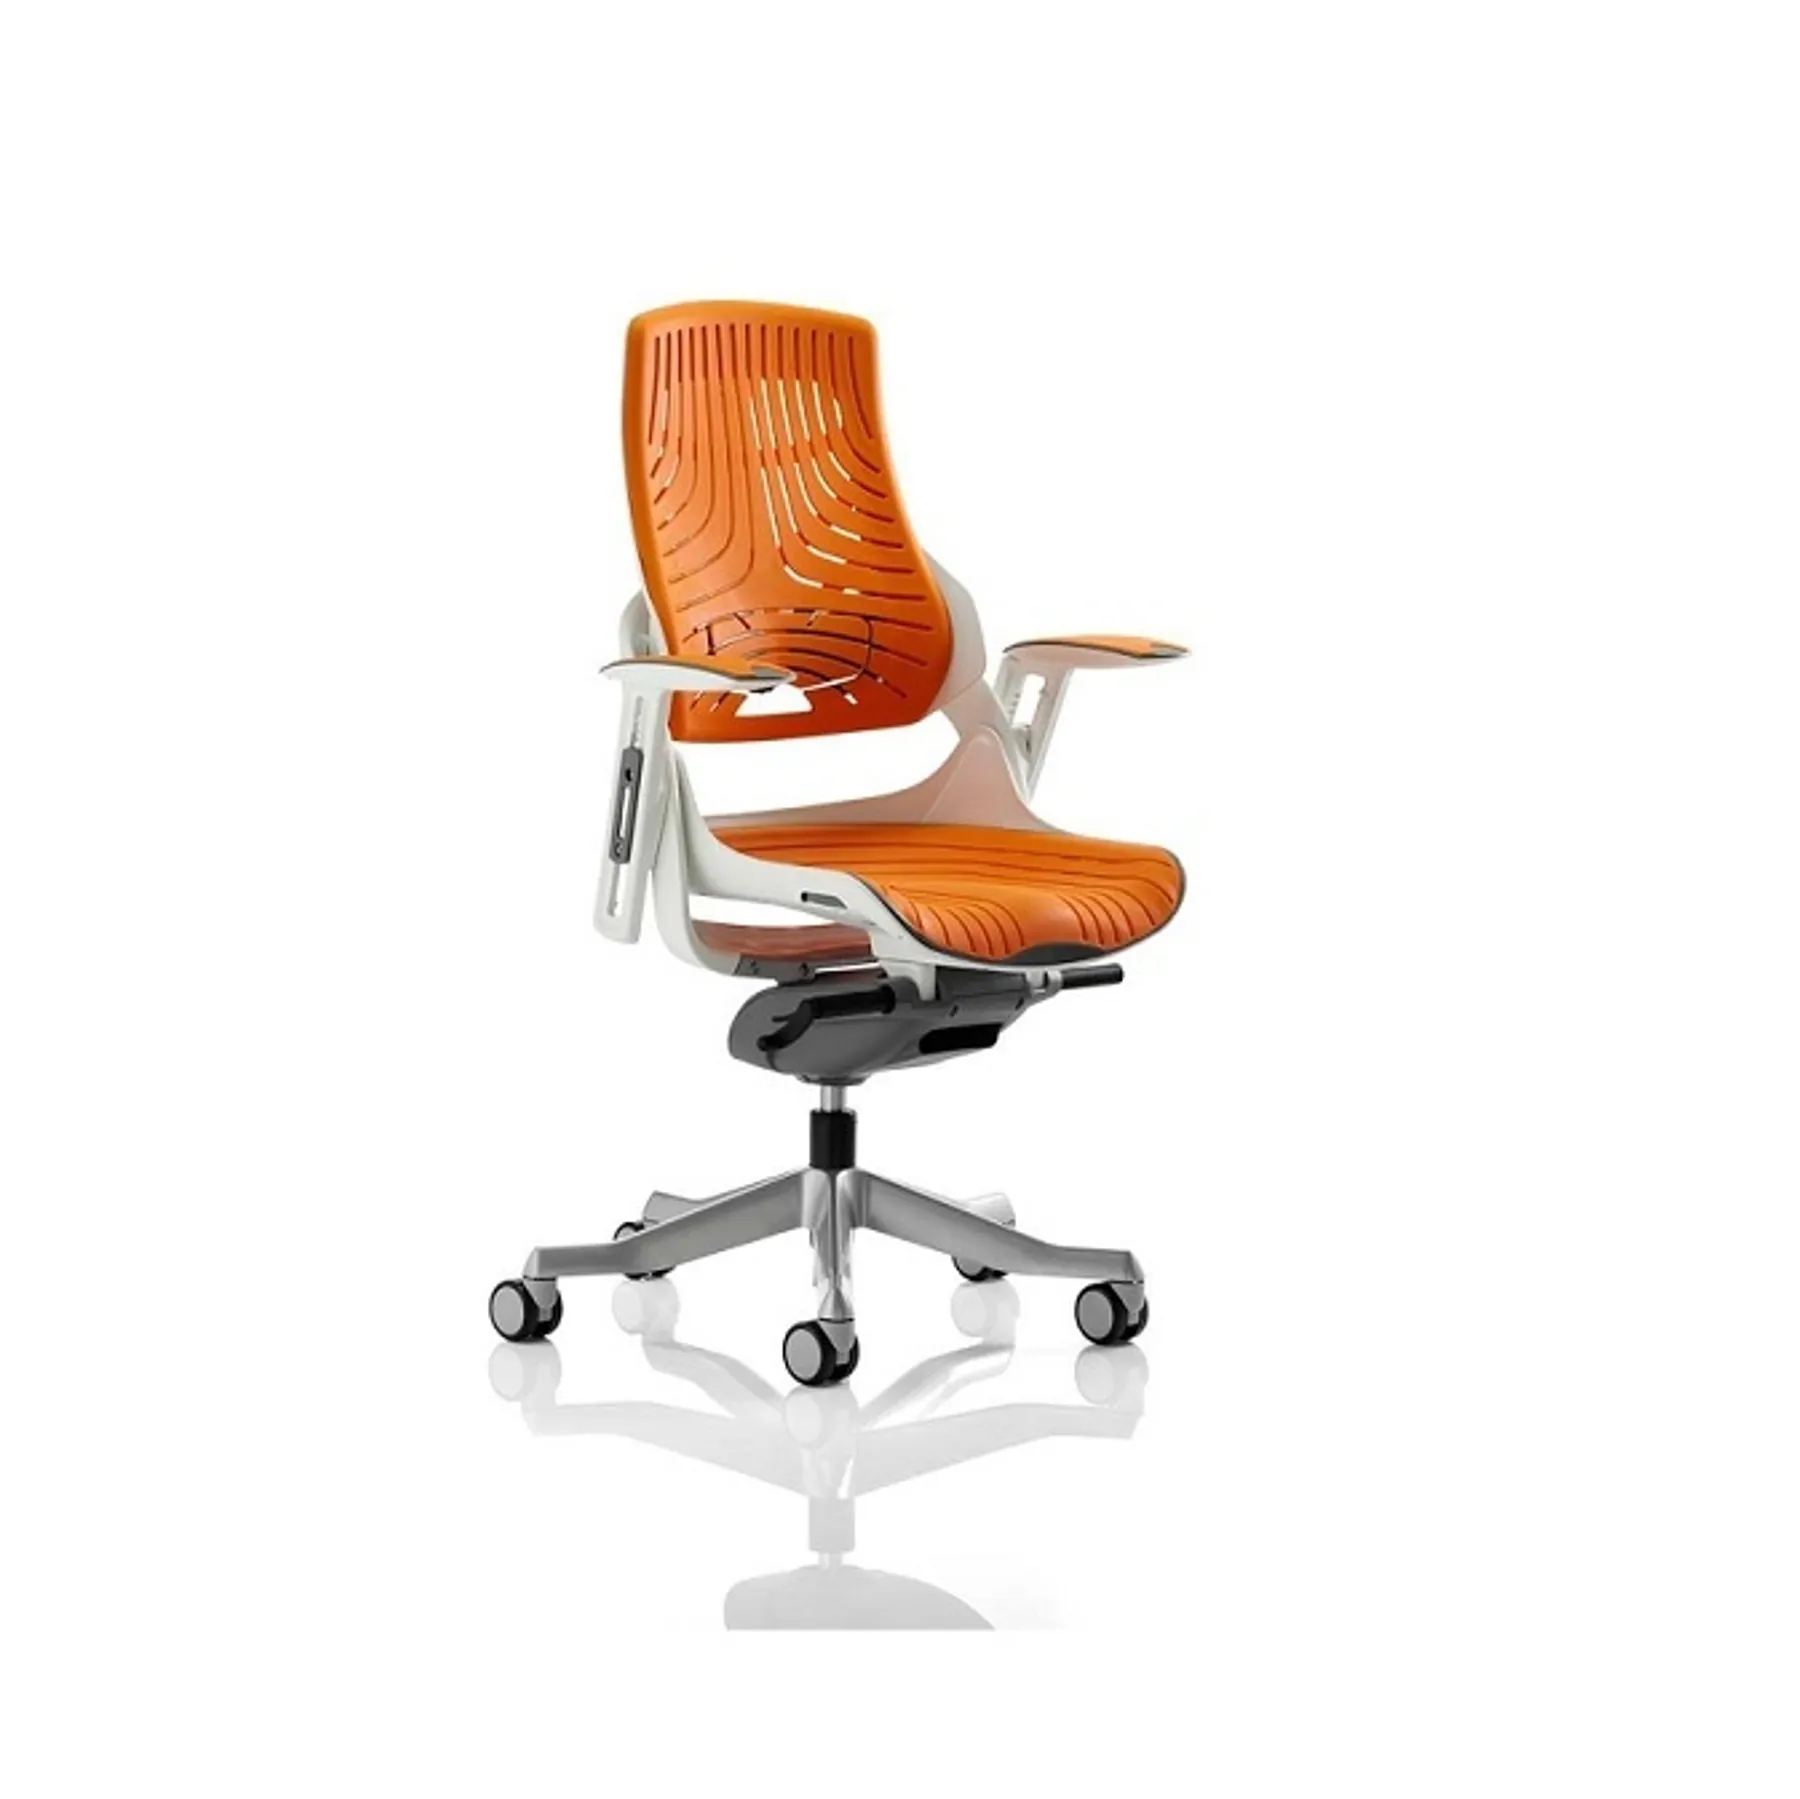 Lof Direct Dynamic zure orange elastomer white frame executive chair no headrest